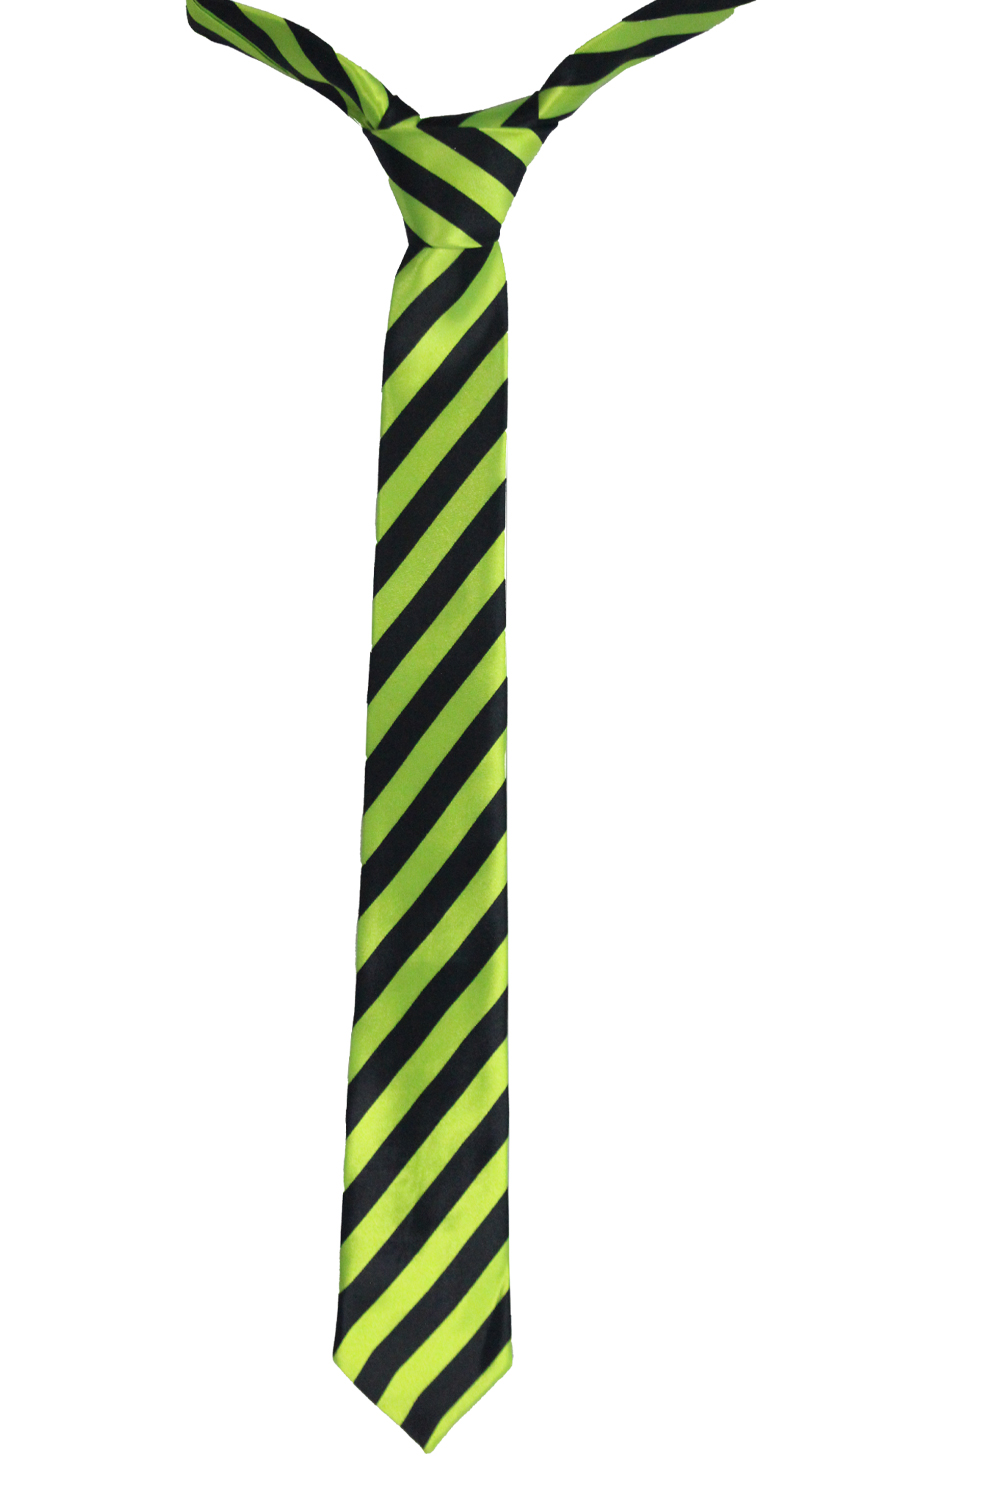 Satin Black Green Striped Neck Tie